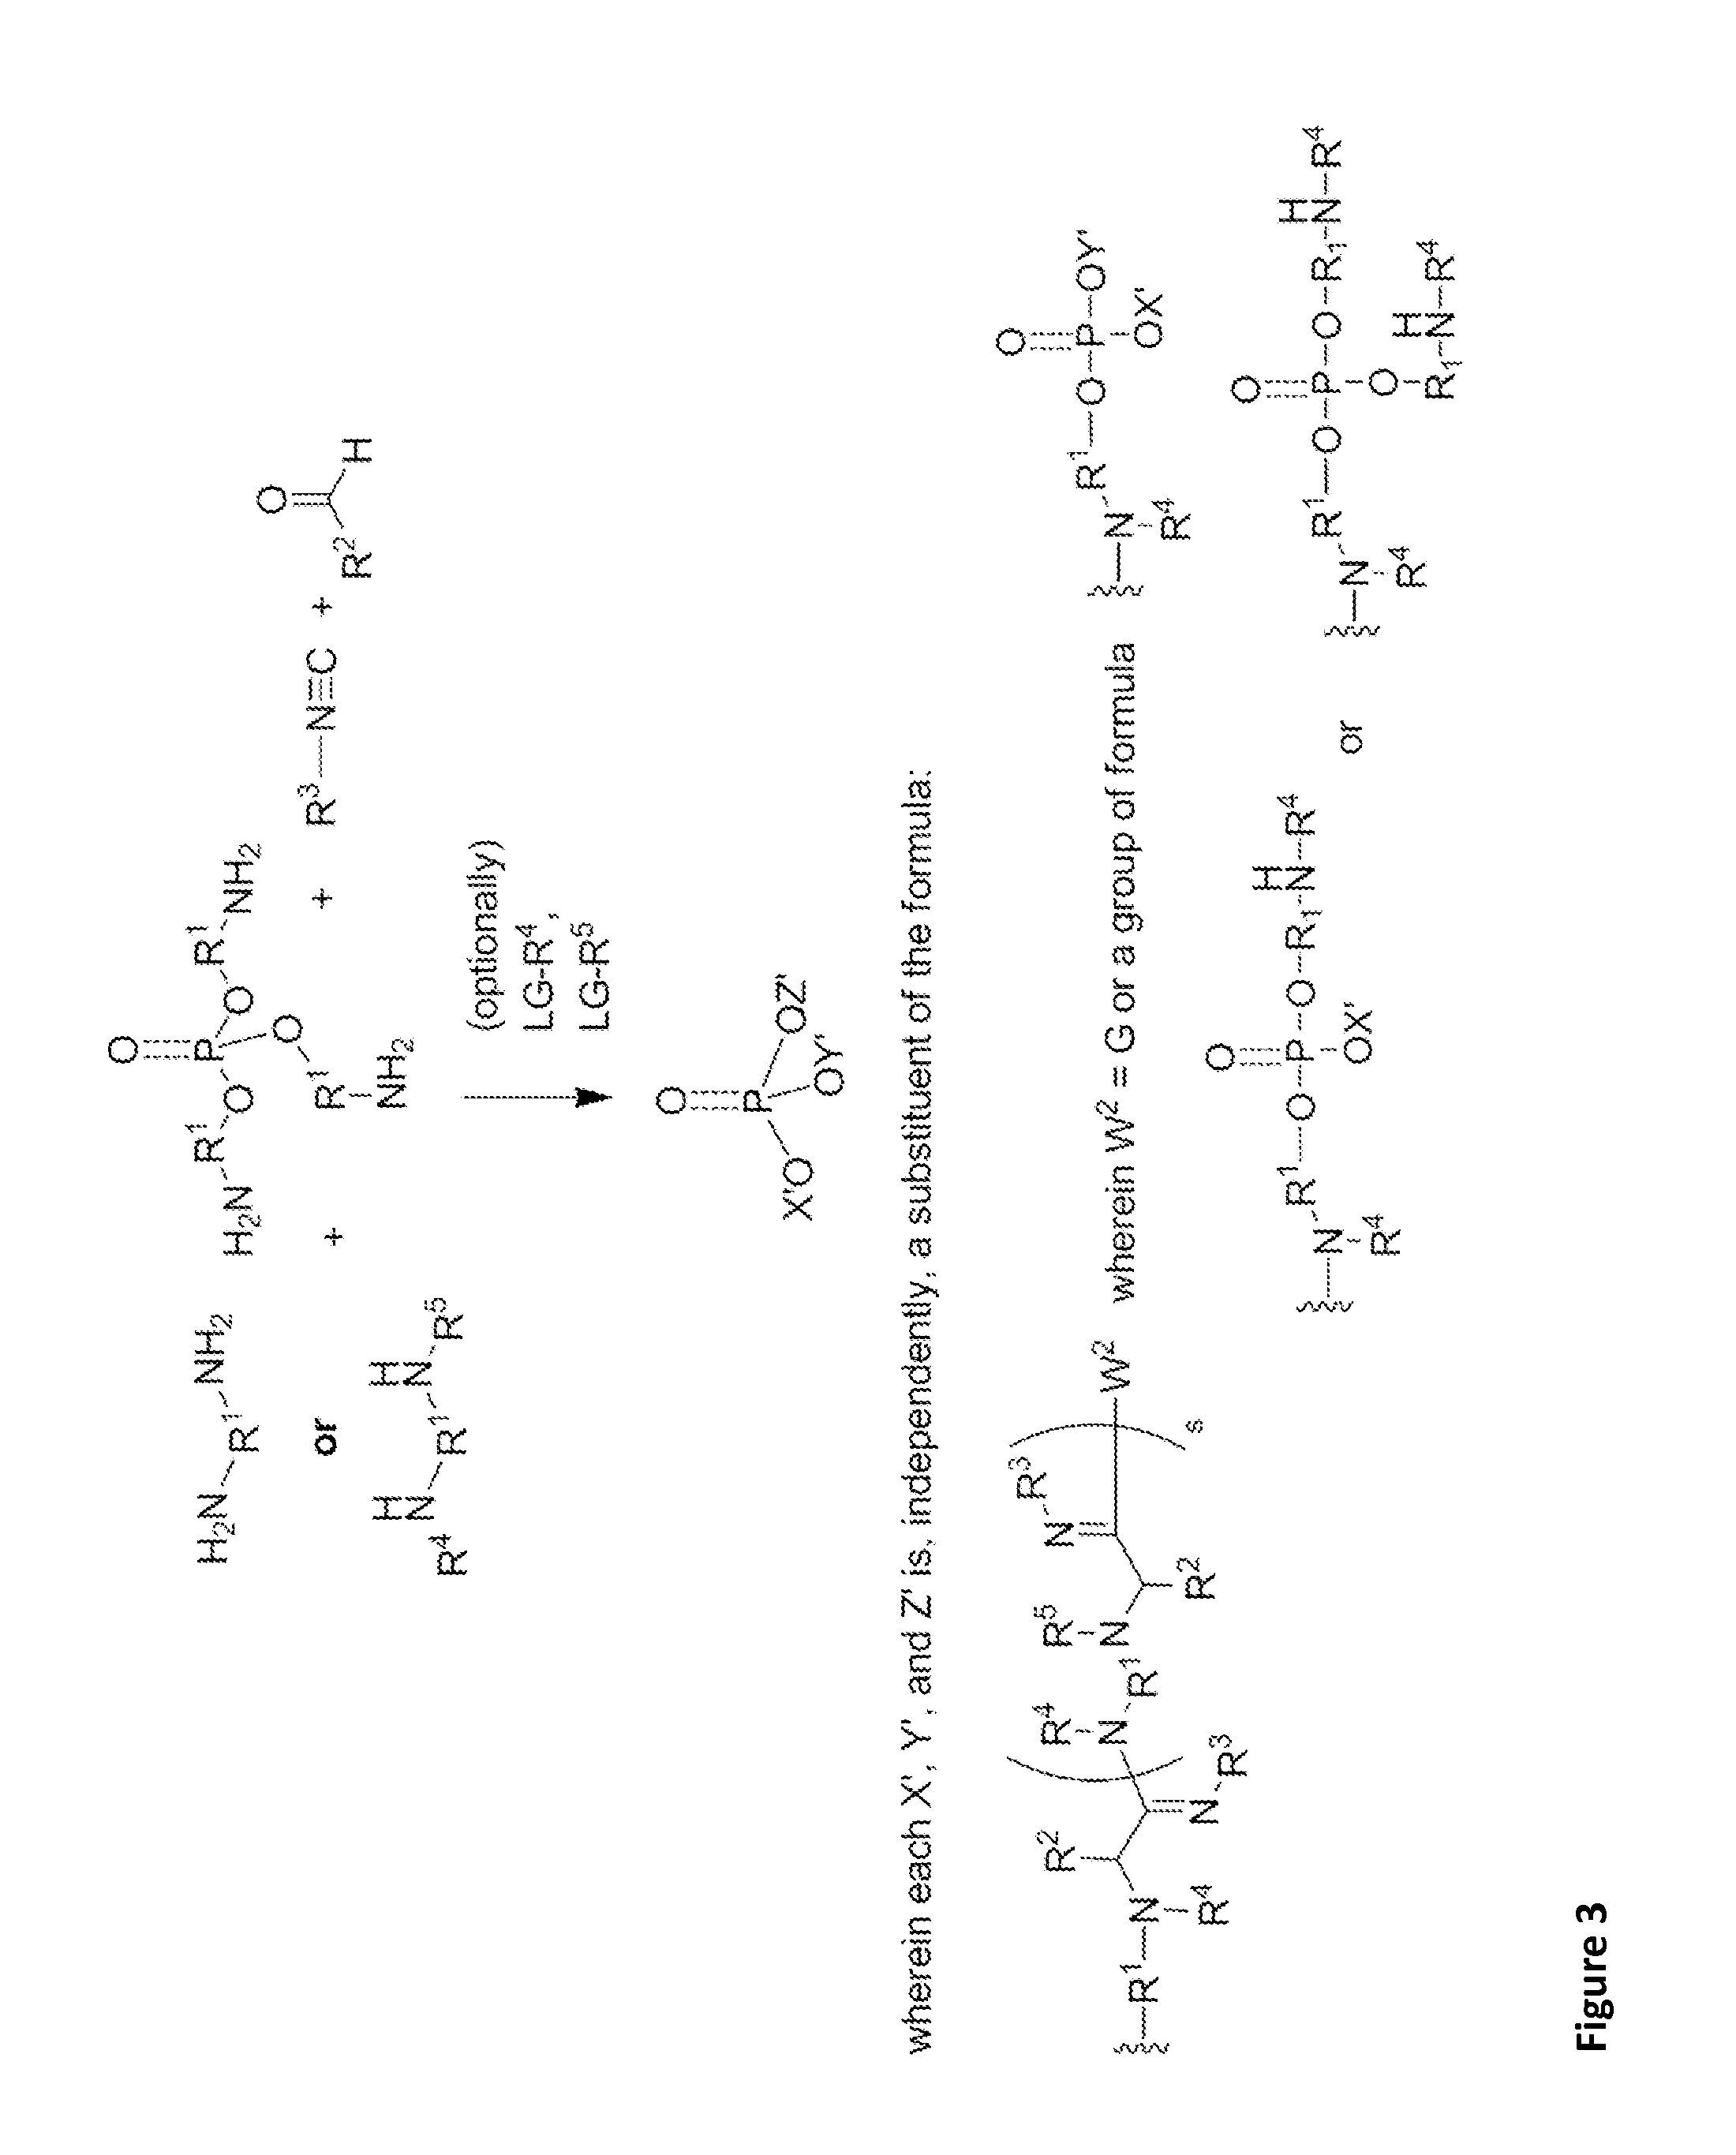 Alpha-aminoamidine polymers and uses thereof